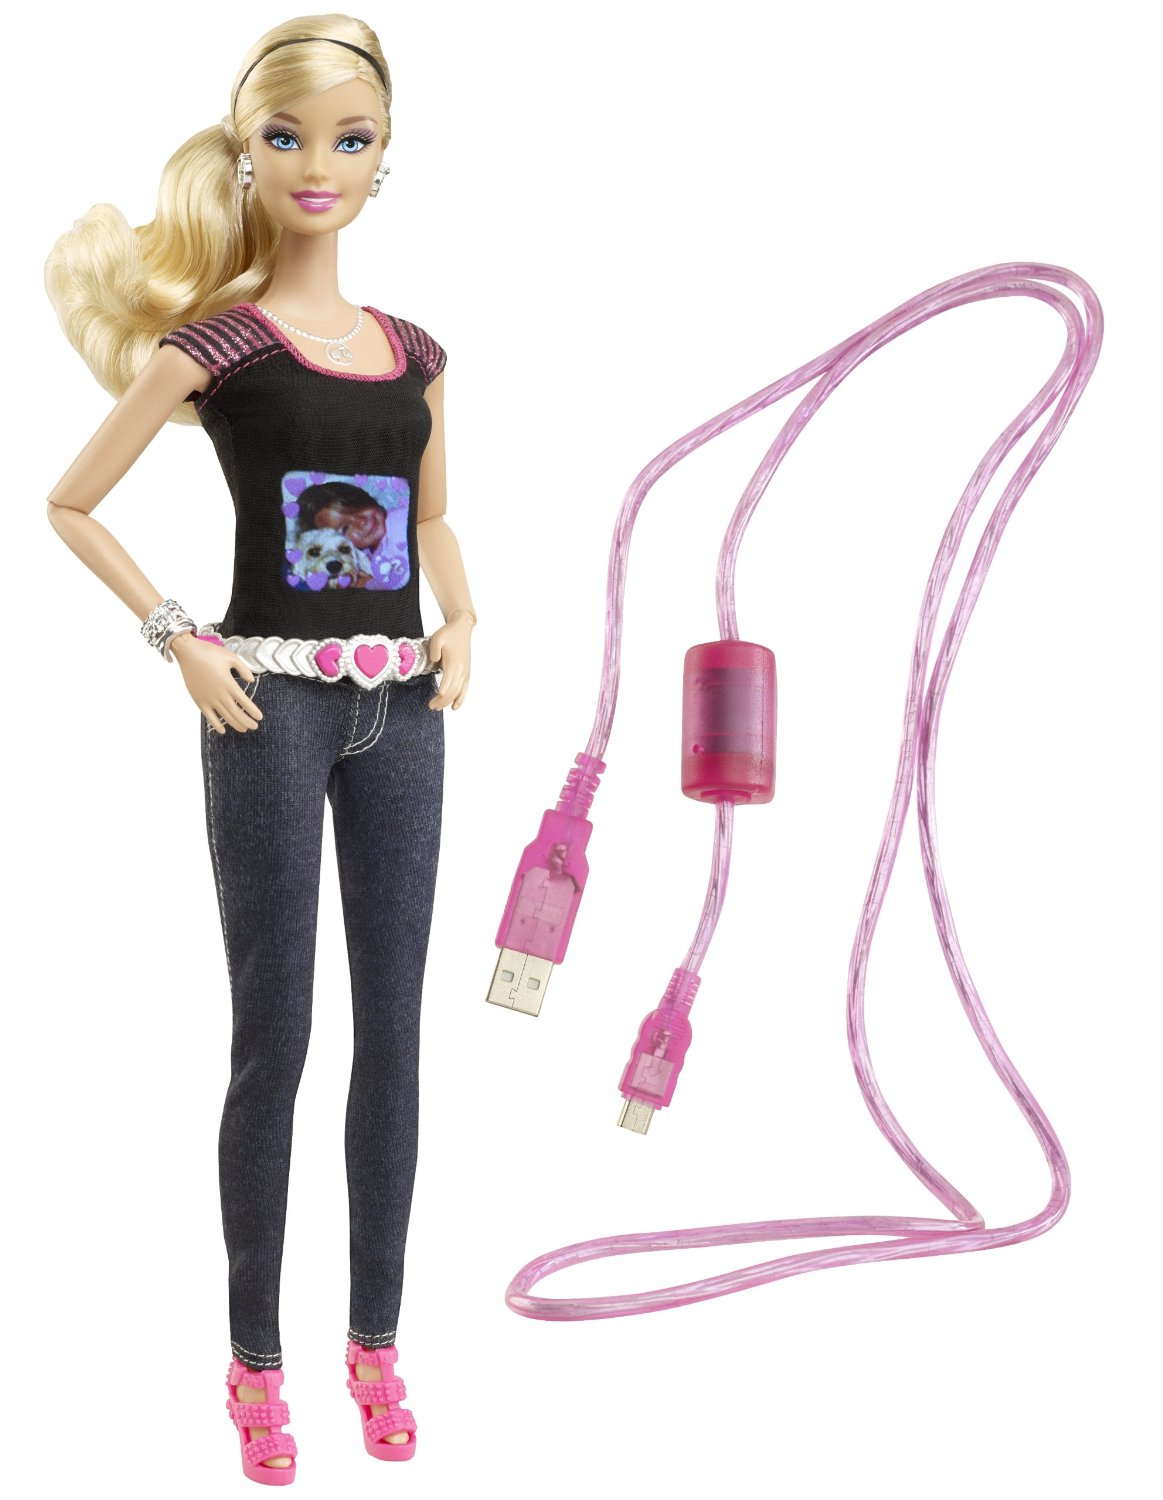 Barbie Photo Fashion Doll Only $17.17 – Reg $49.99